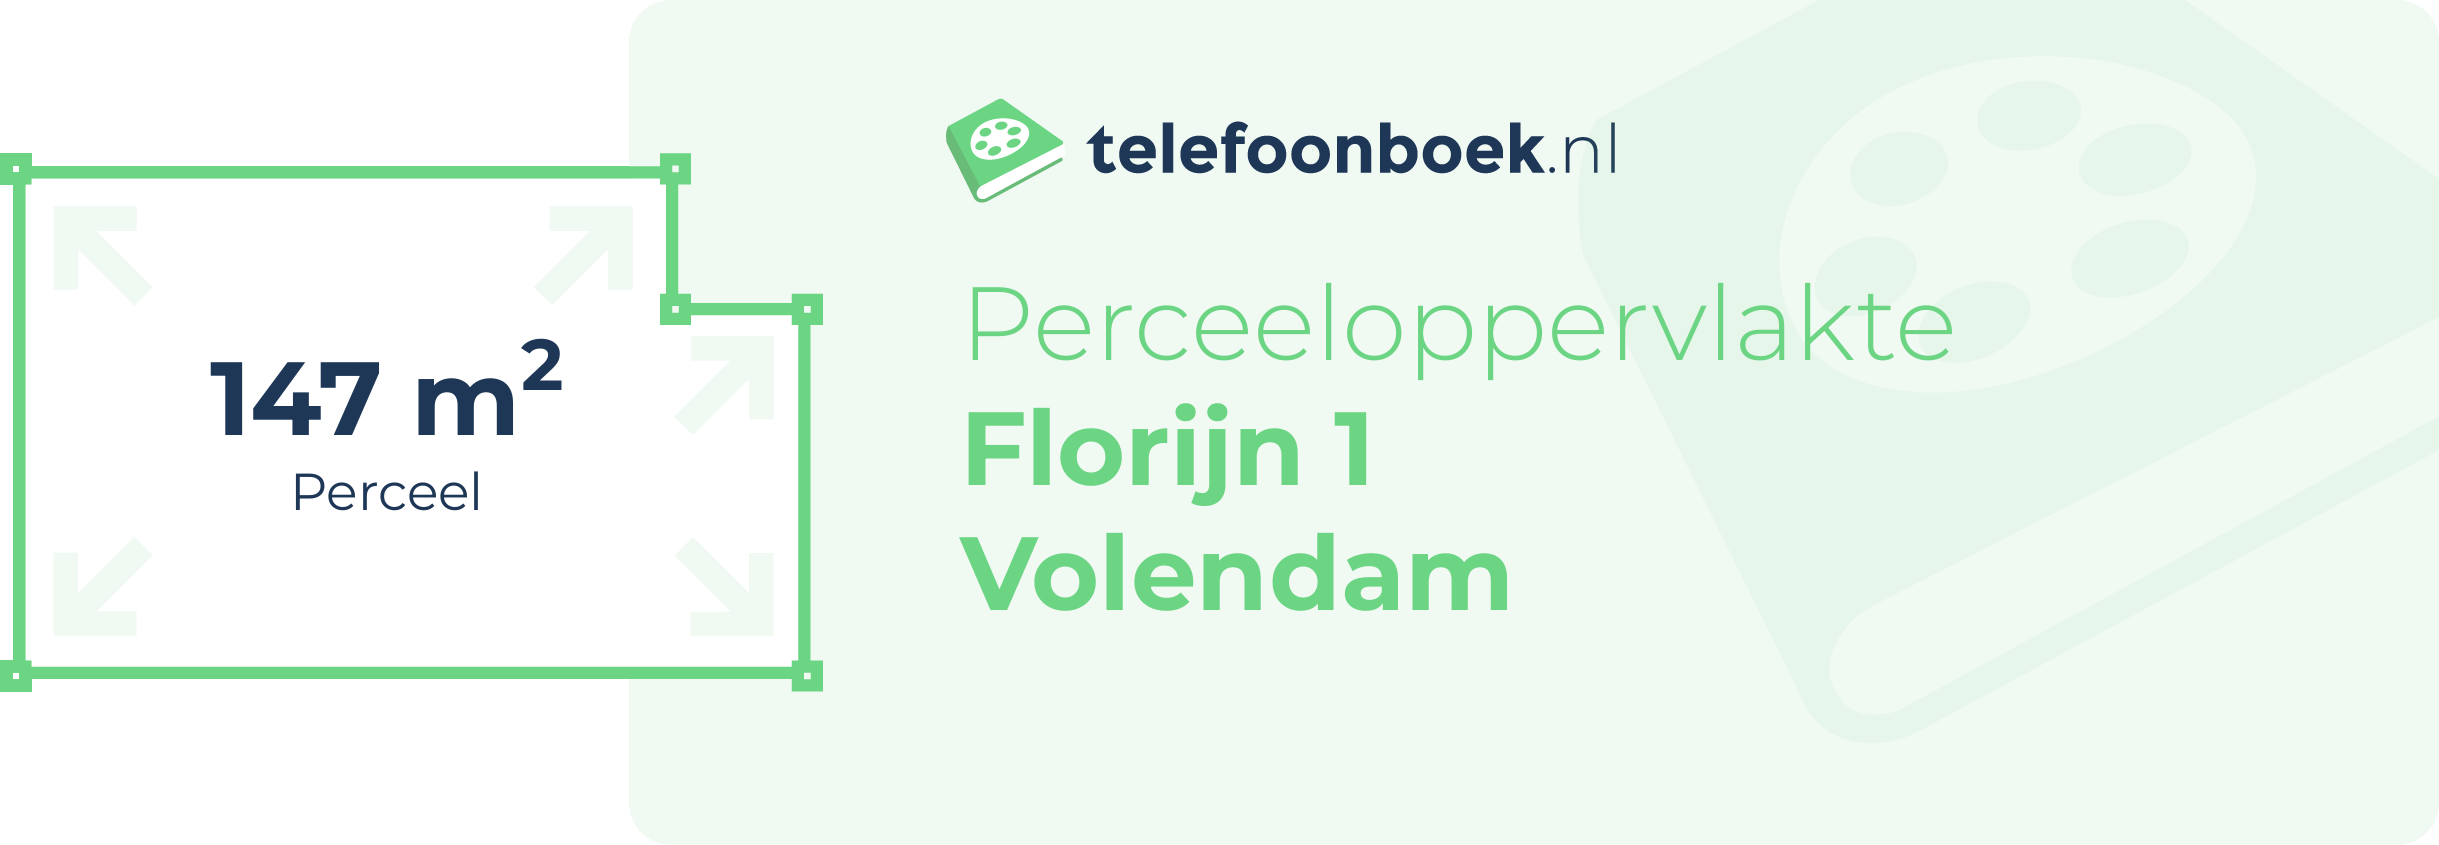 Perceeloppervlakte Florijn 1 Volendam